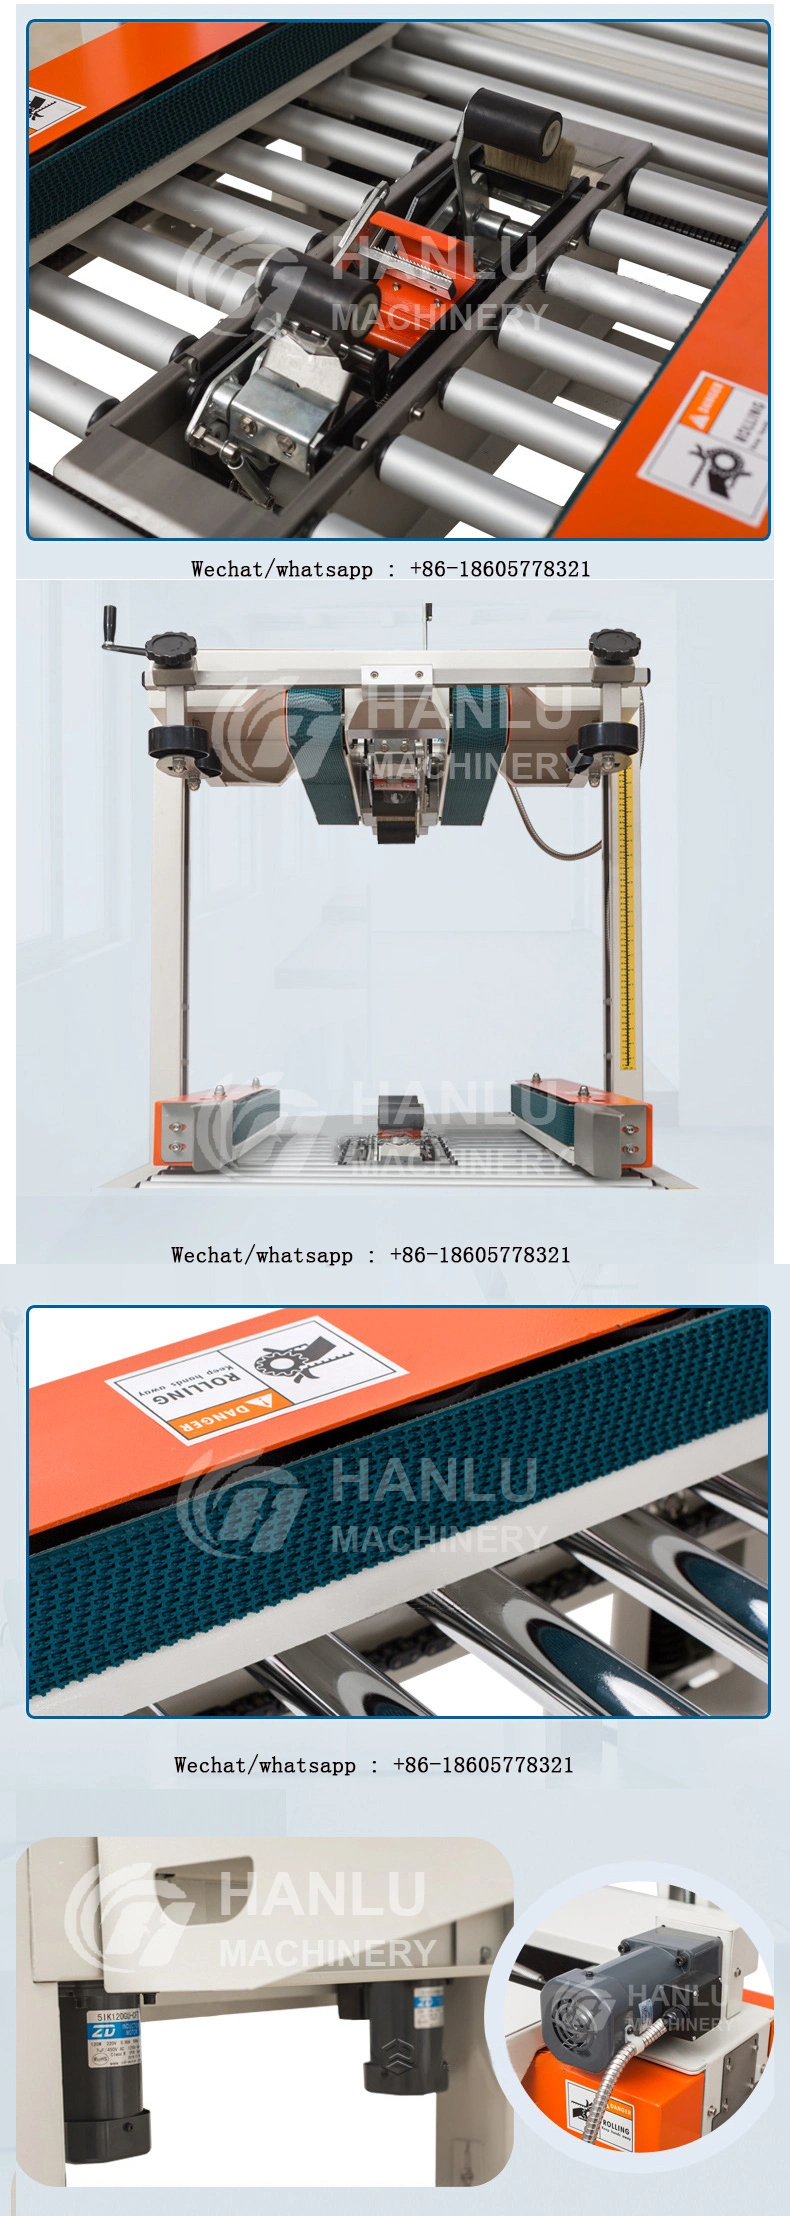 Semi Automatic Carton Sealer Side Conveyor Belt 220V Sealing Machine (Top&side conveyor)